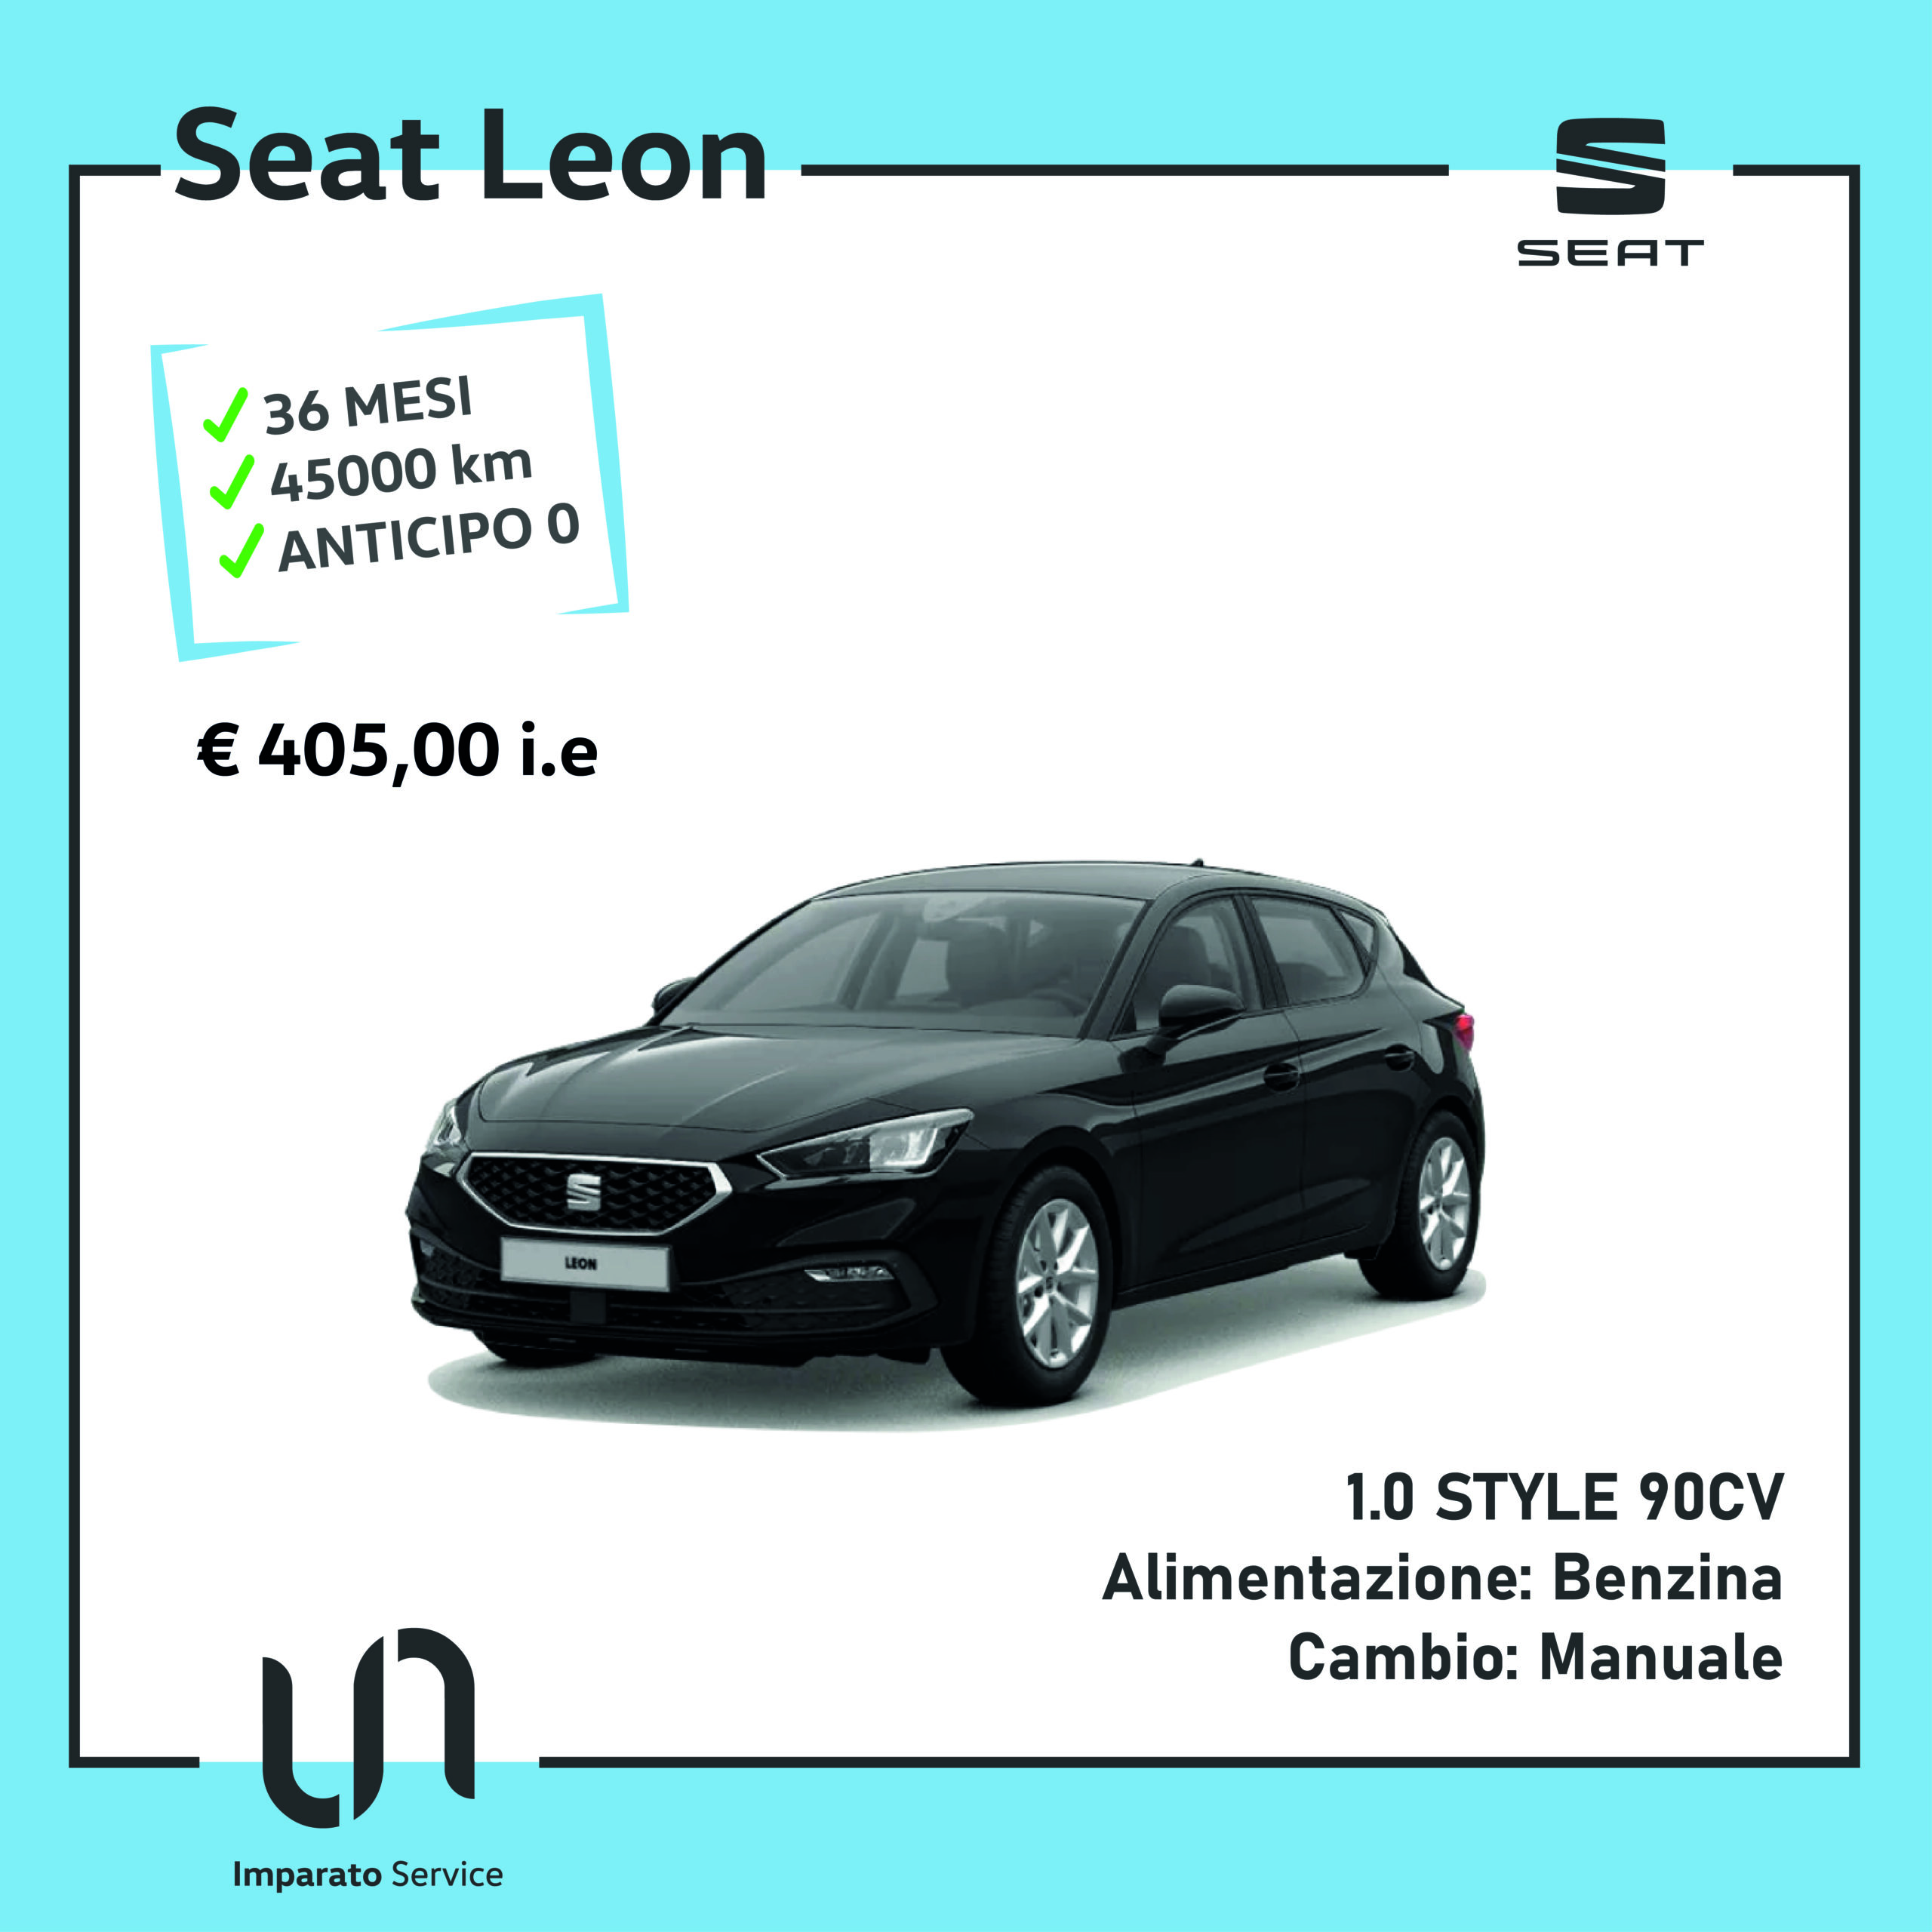 Seat Leon 1.0 STYLE 90CV